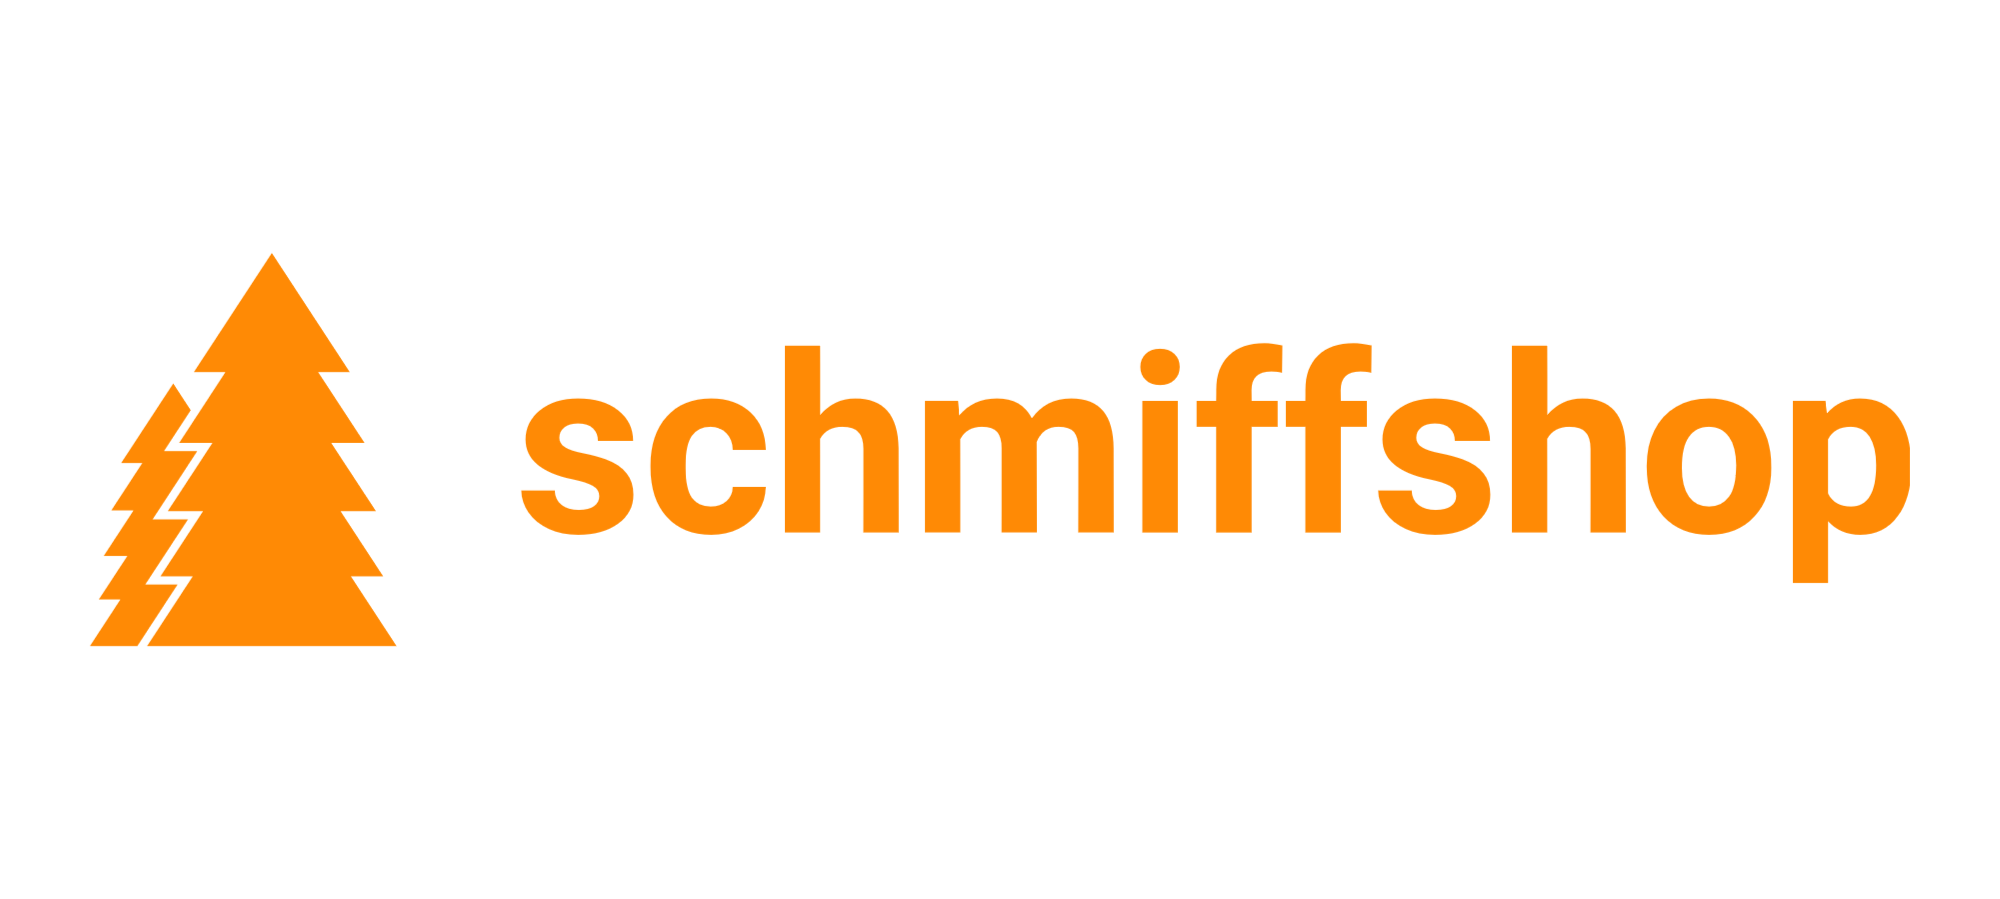 schmiffshop - Harry's Holzuhren